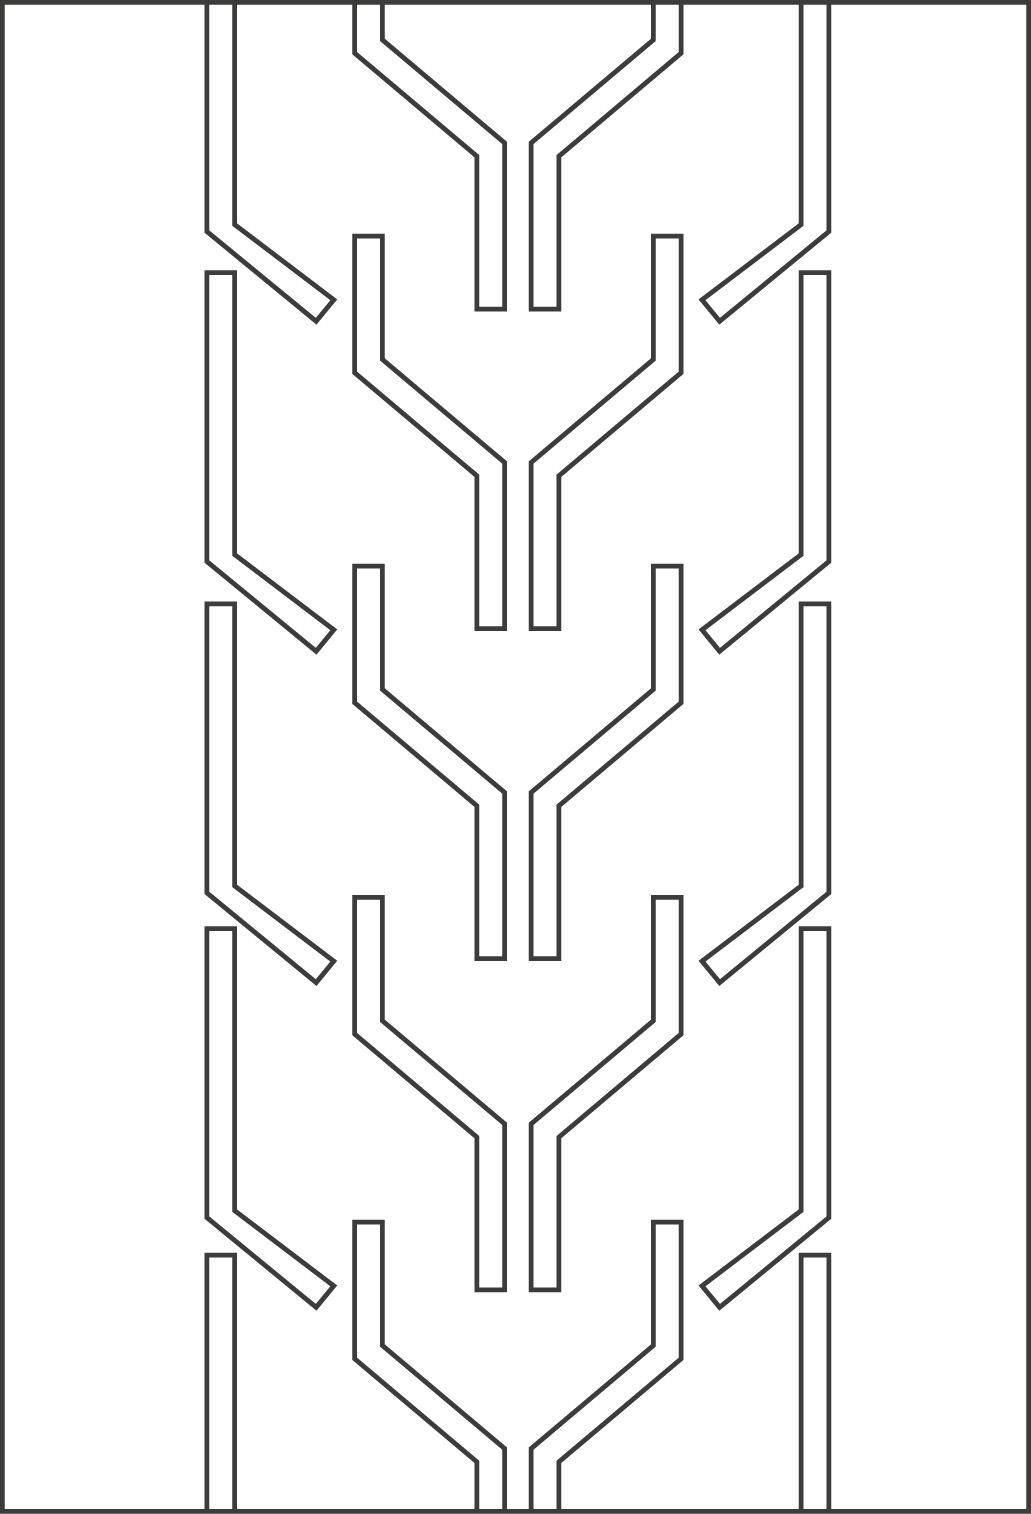 Steel Cord Rubber Conveyor Belt Chevron Patterned Cleated Industrial Belt